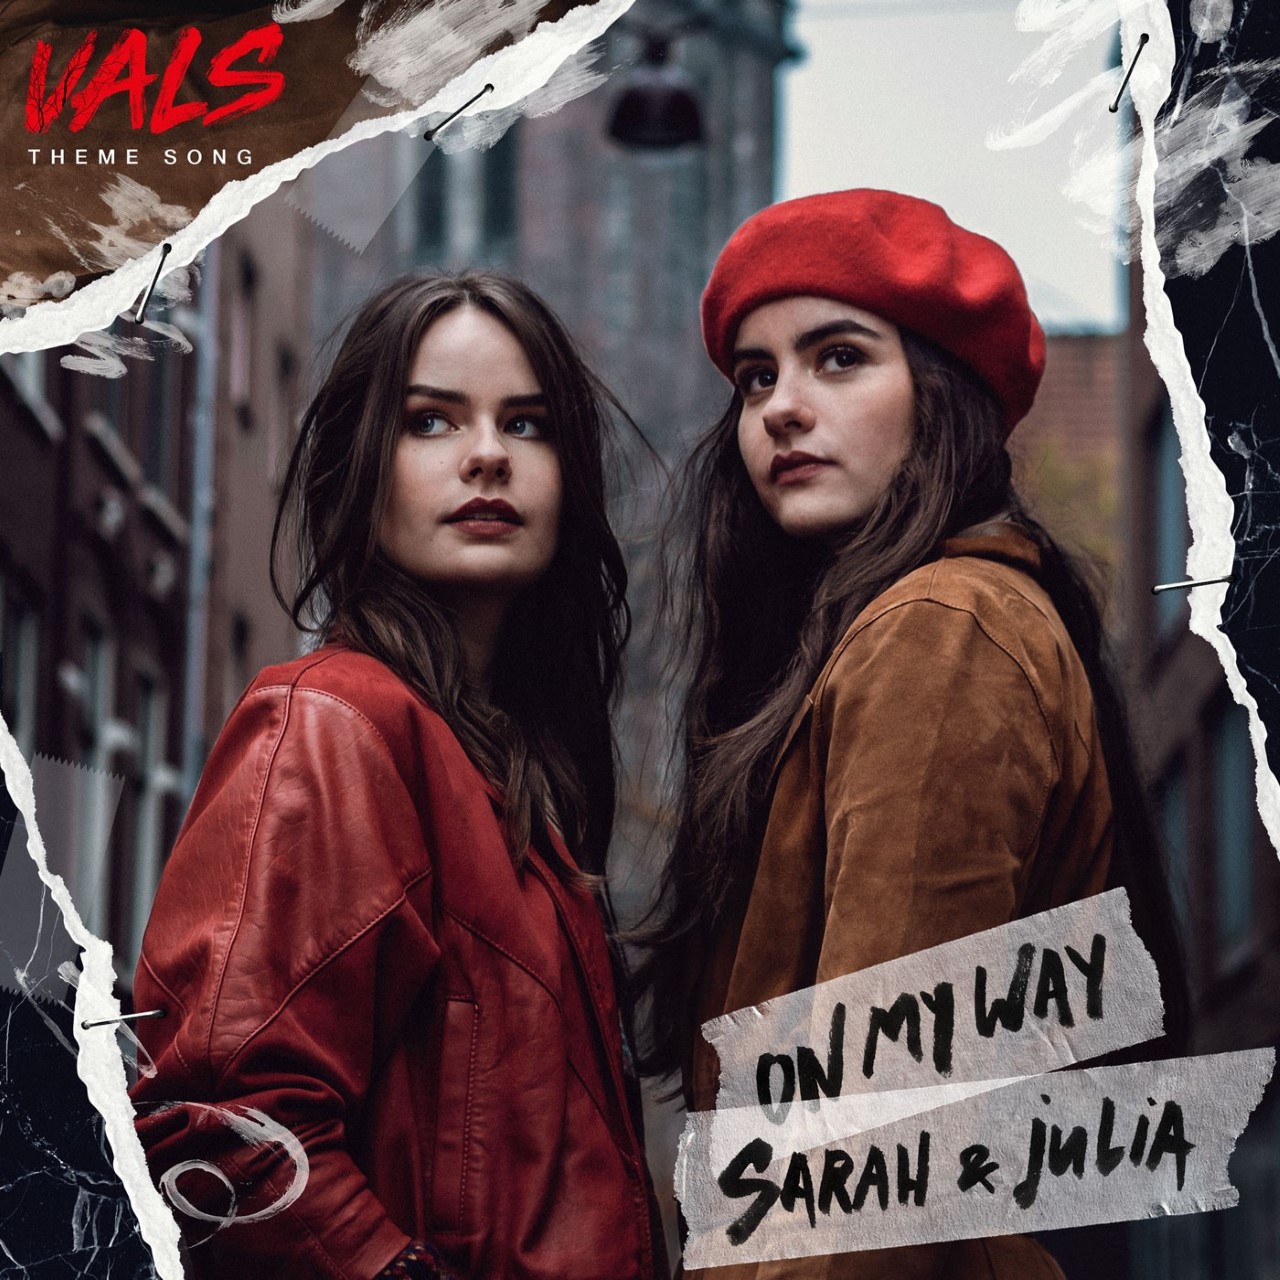 SARAH &amp; JULIA - ON MY WAY (VALS THEME SONG 2019)